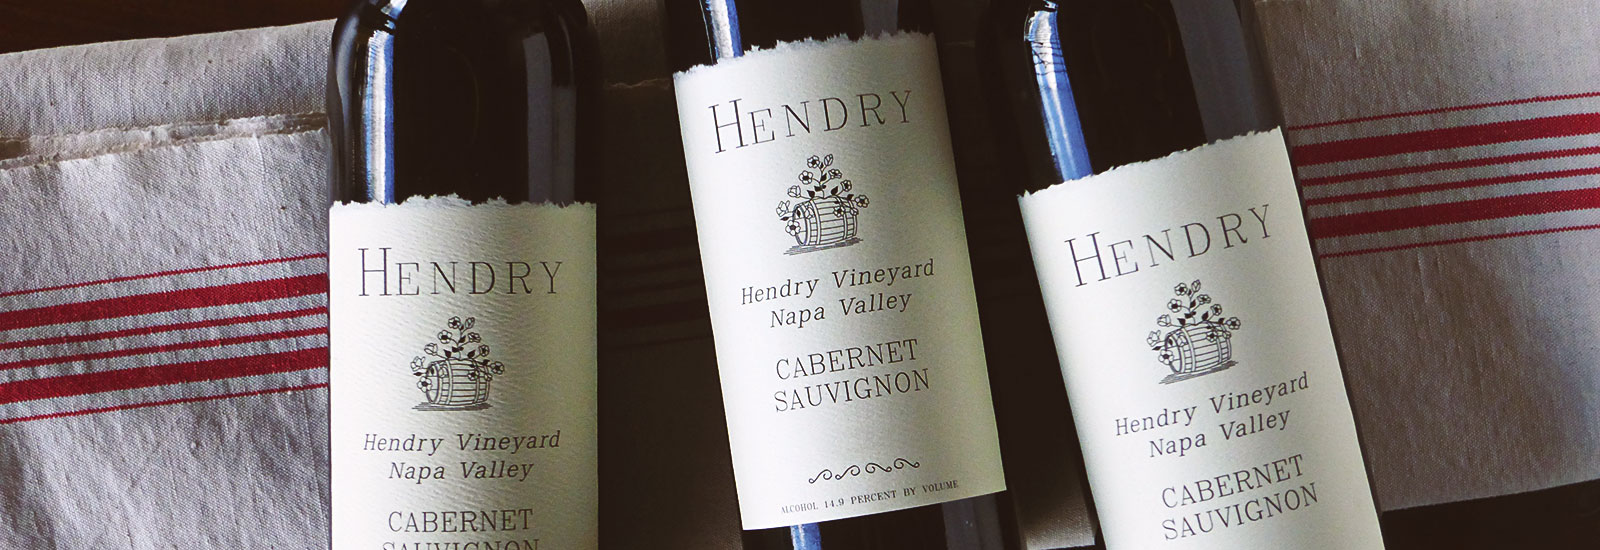 Hendry Cabernet Sauvignon wine bottles